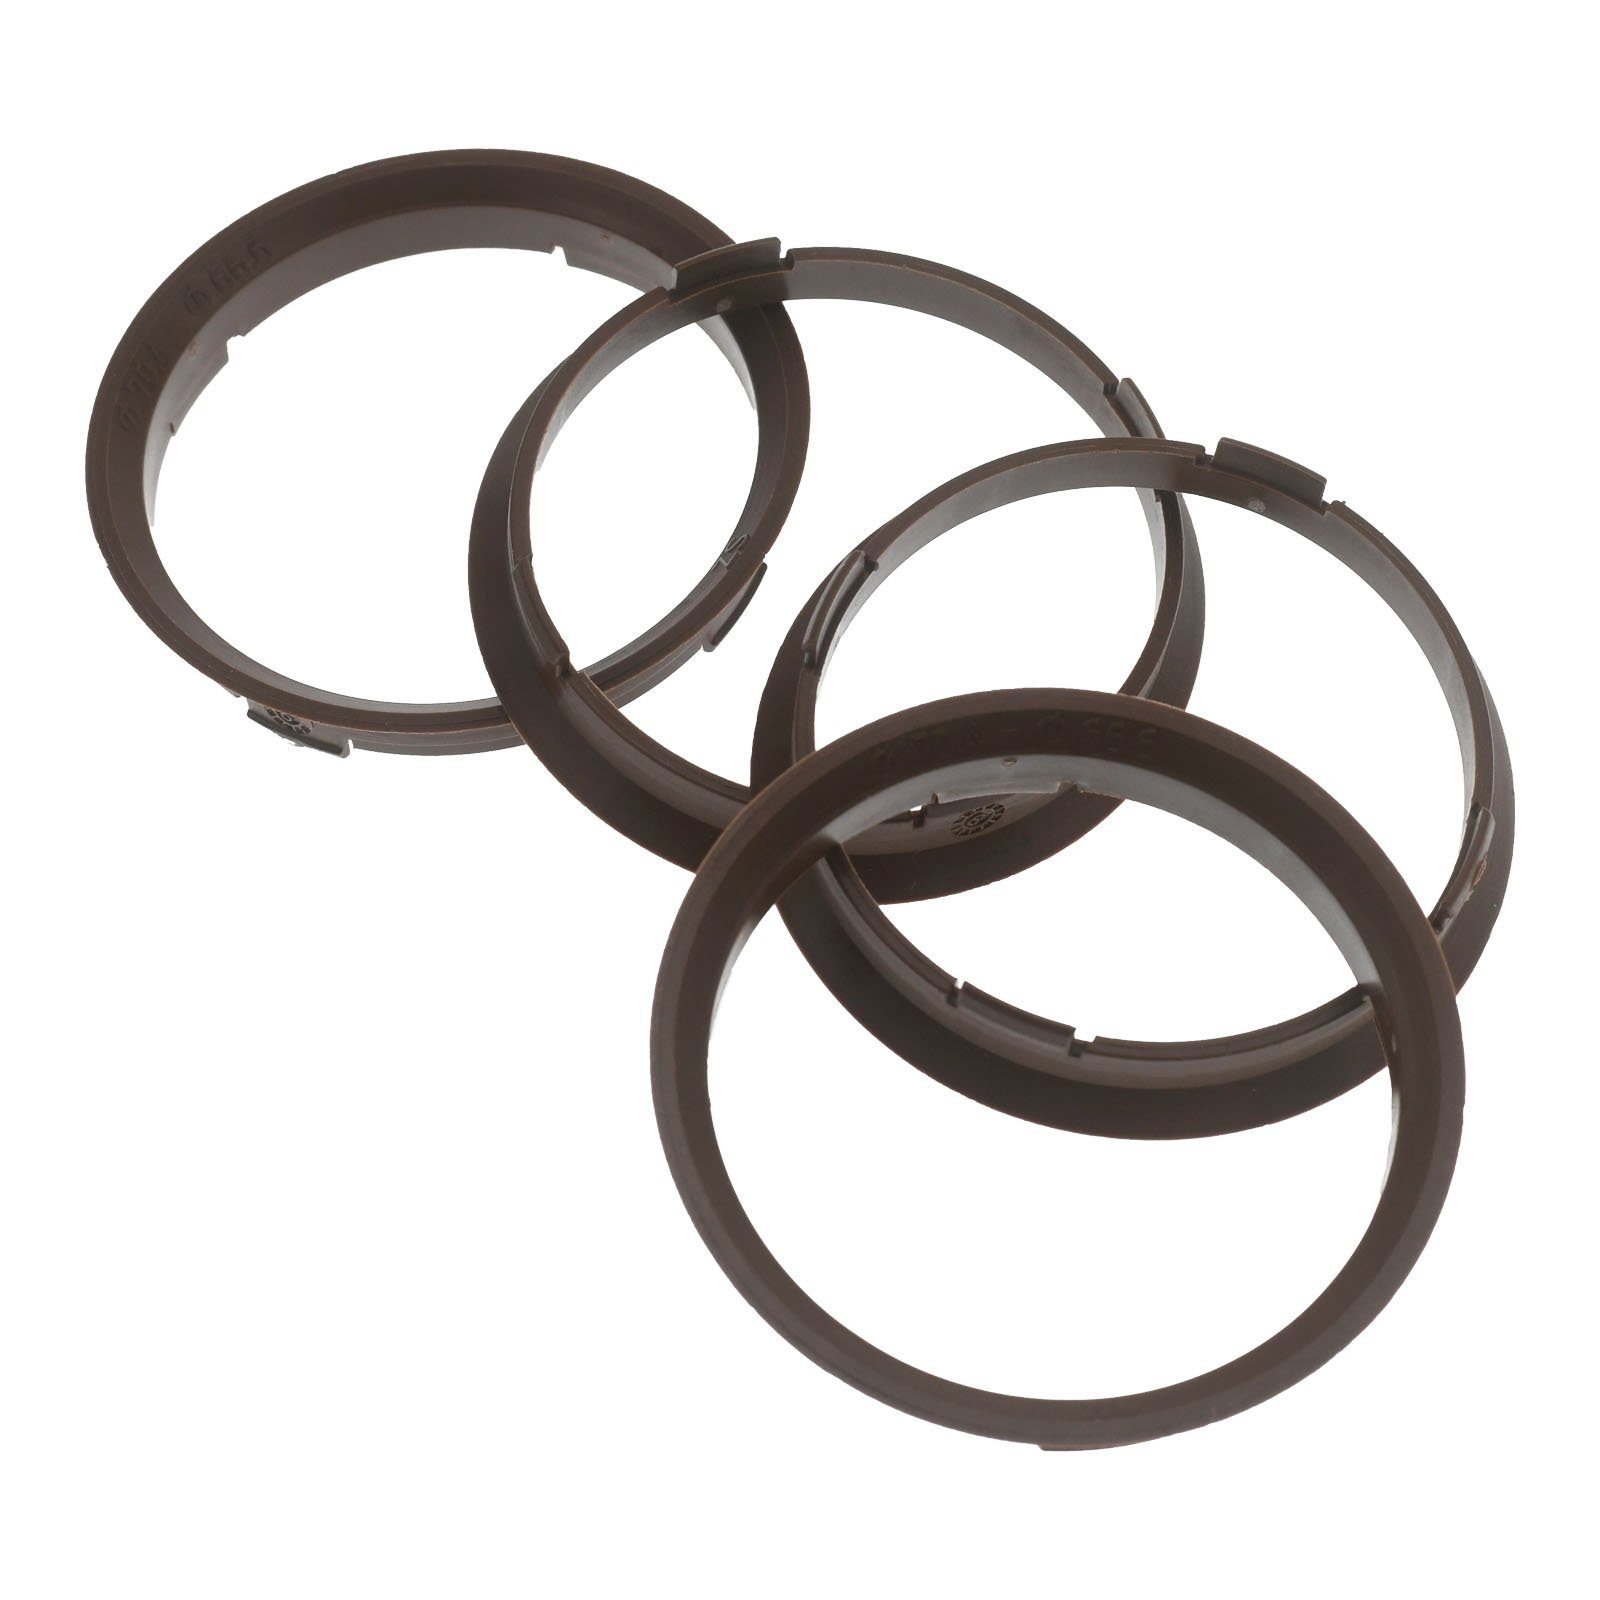 RKC Reifenstift 4x Zentrierringe Dunkelbraun Felgen Ringe Made in Germany,  Maße: 70,4 x 66,6 mm